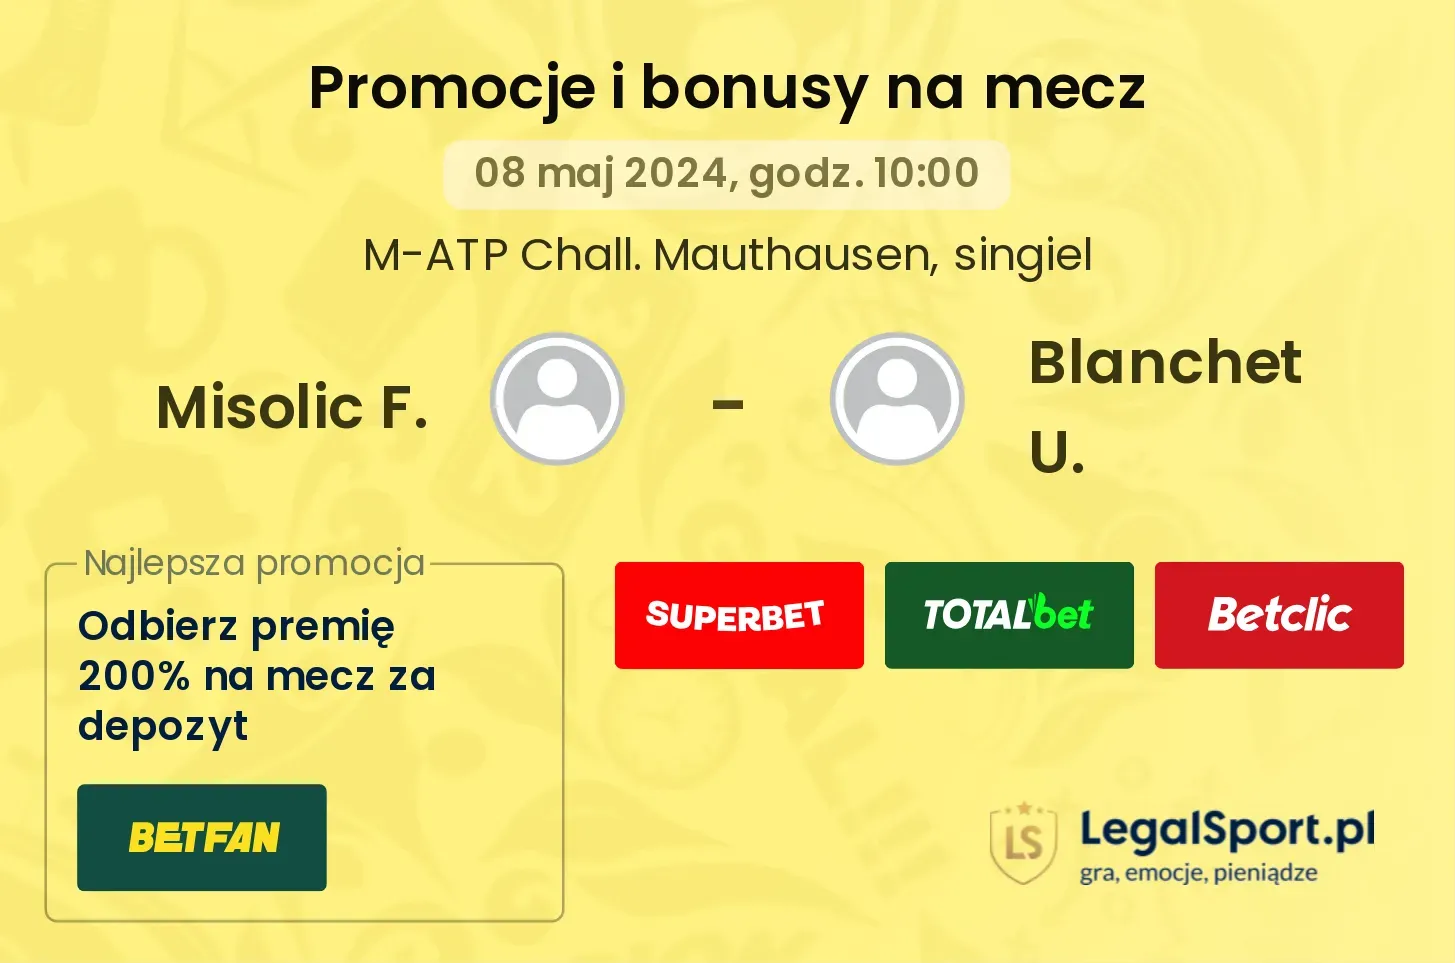 Misolic F. - Blanchet U. promocje bonusy na mecz